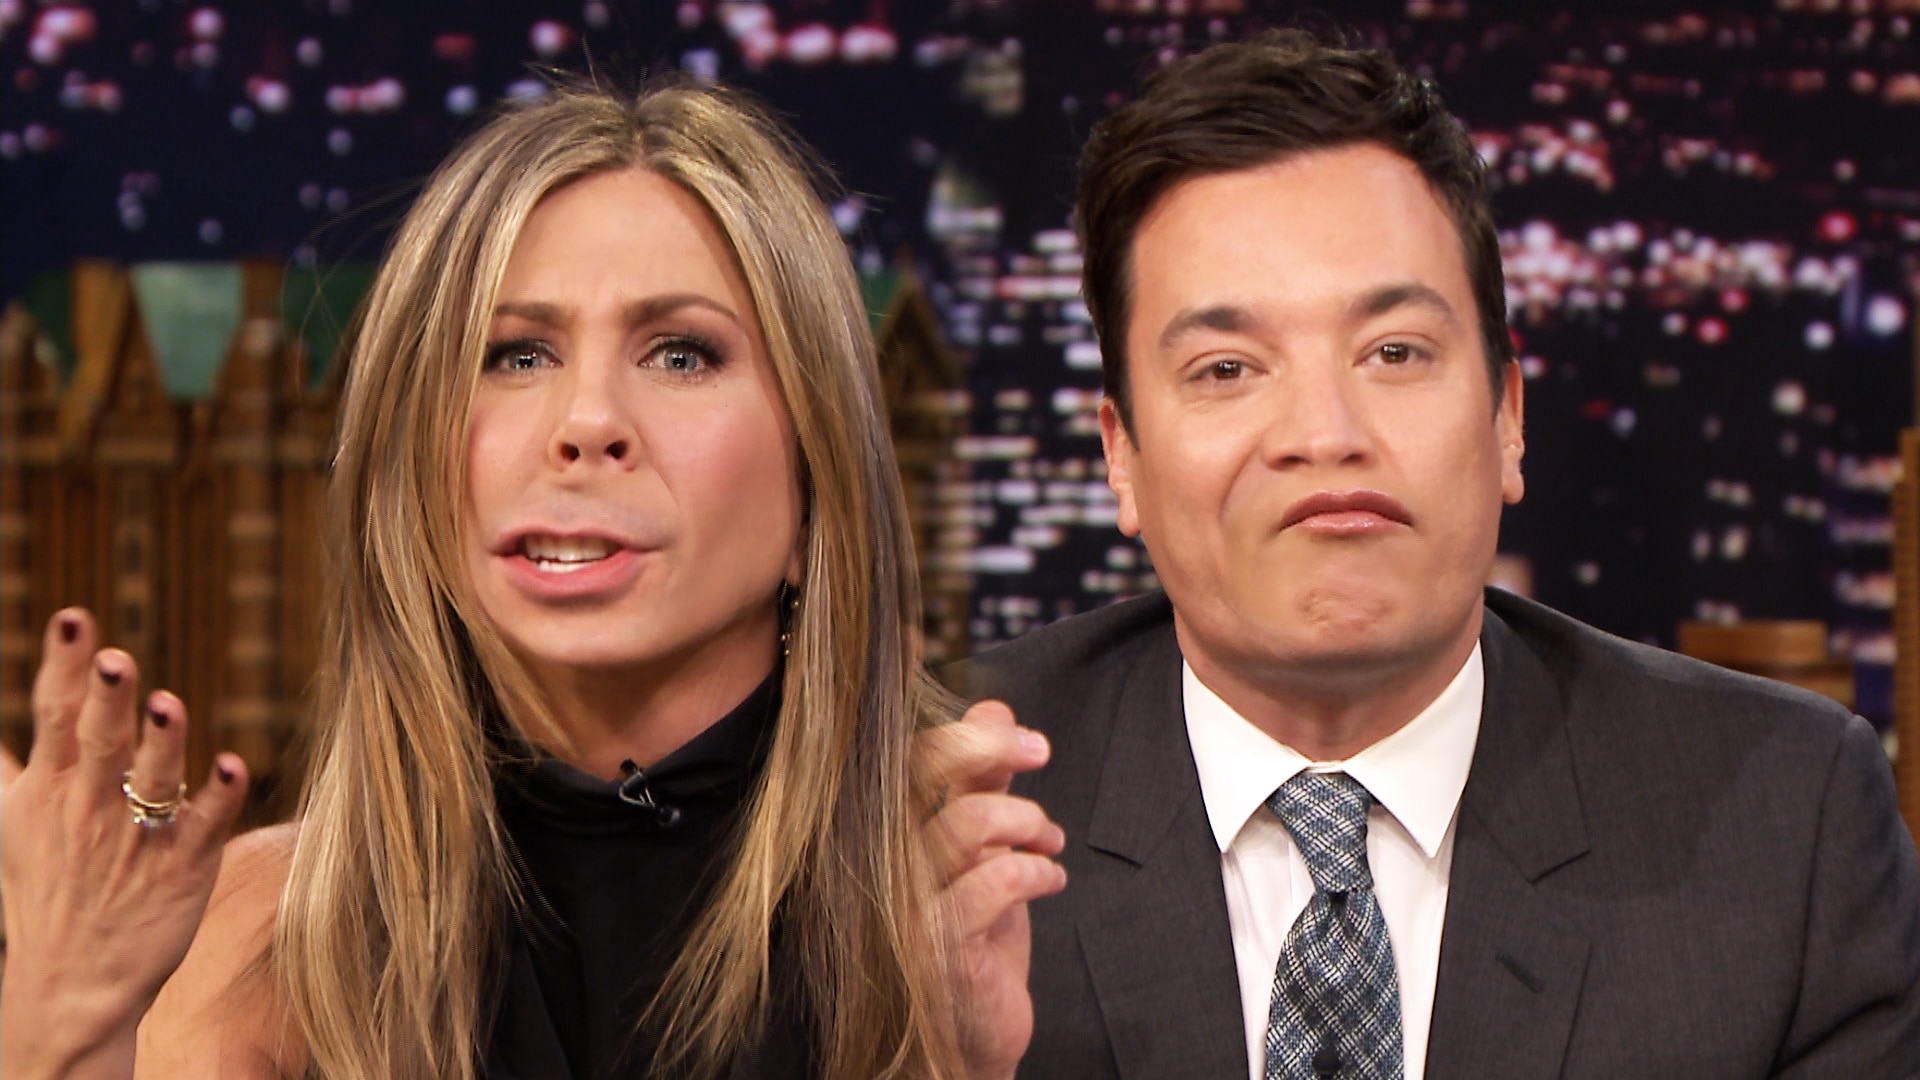 Watch The Tonight Show Starring Jimmy Fallon Highlight Lip Flip with Jennifer Aniston